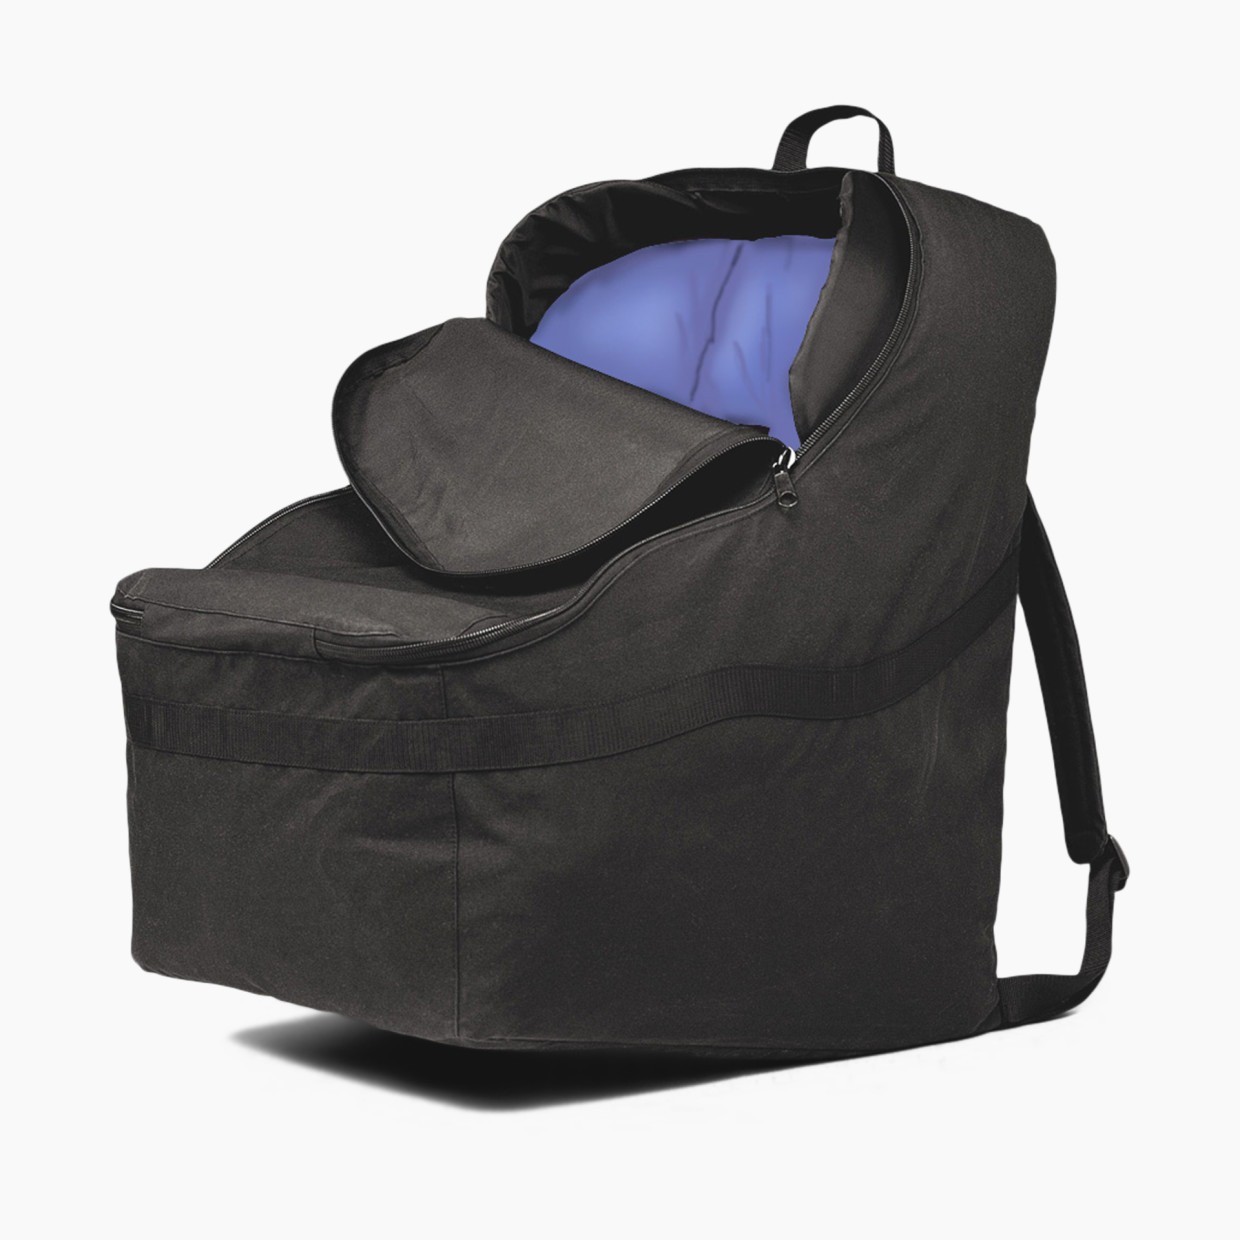 JL Childress Ultimate Padded Backpack Car Seat Travel Bag - Black.